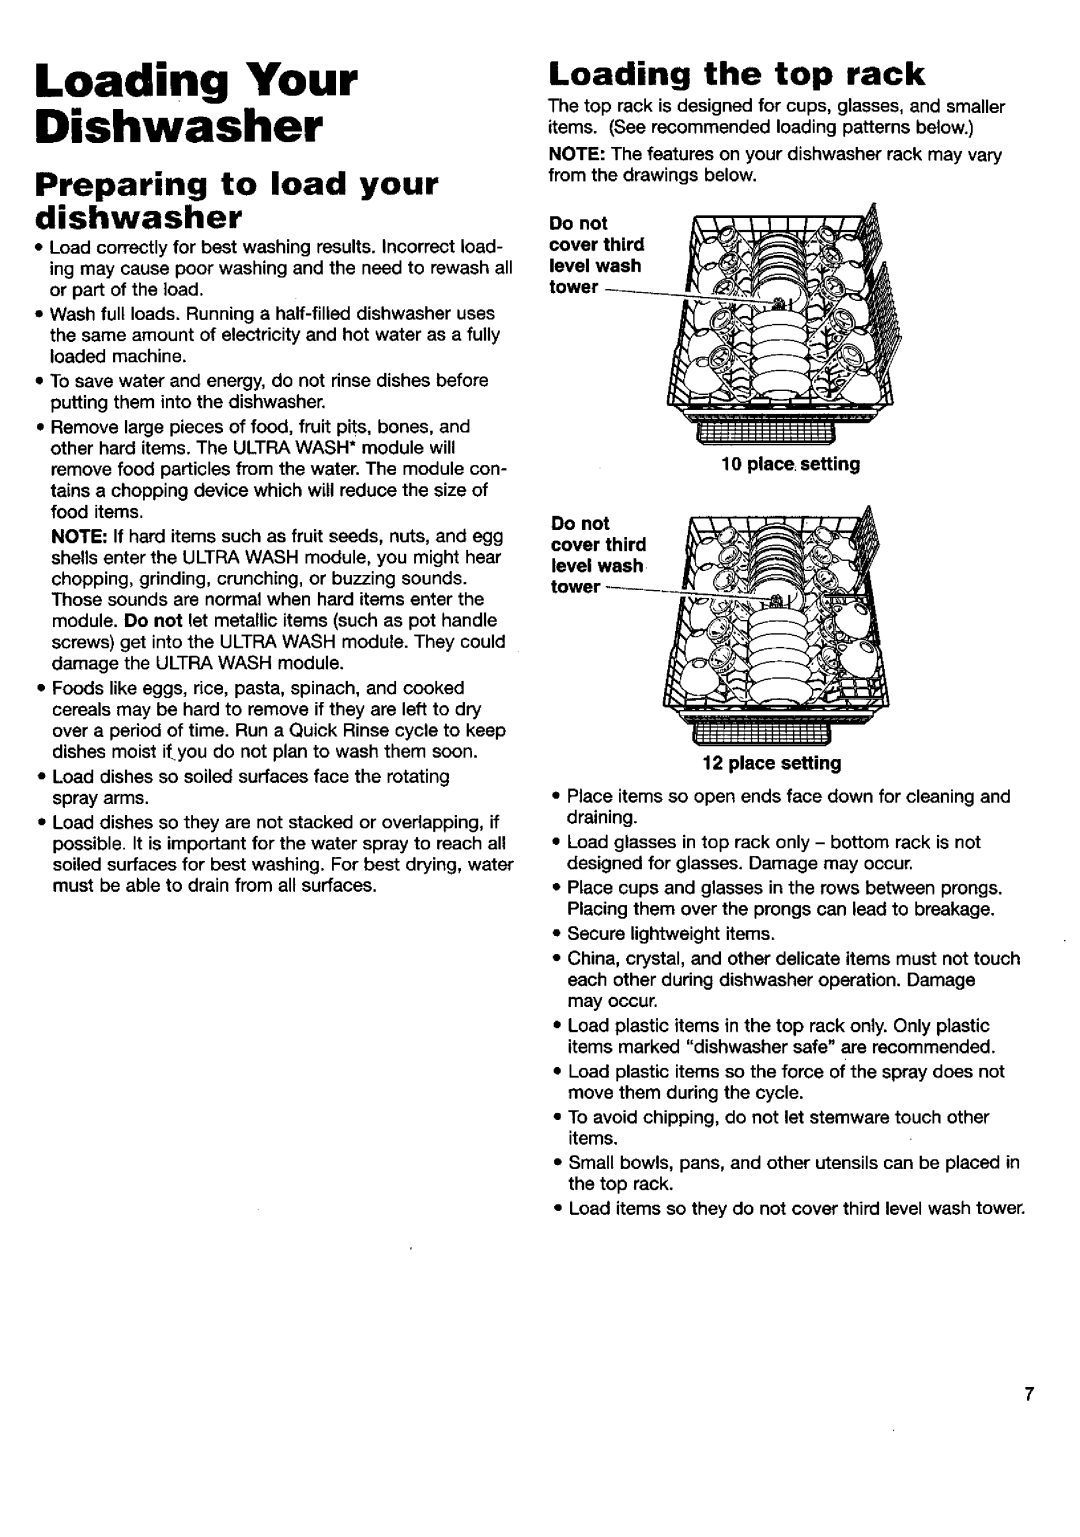 Kenmore 15592, 15595 manual Loading Your Dishwasher, Preparing to load your dishwasher, Loading the top rack 